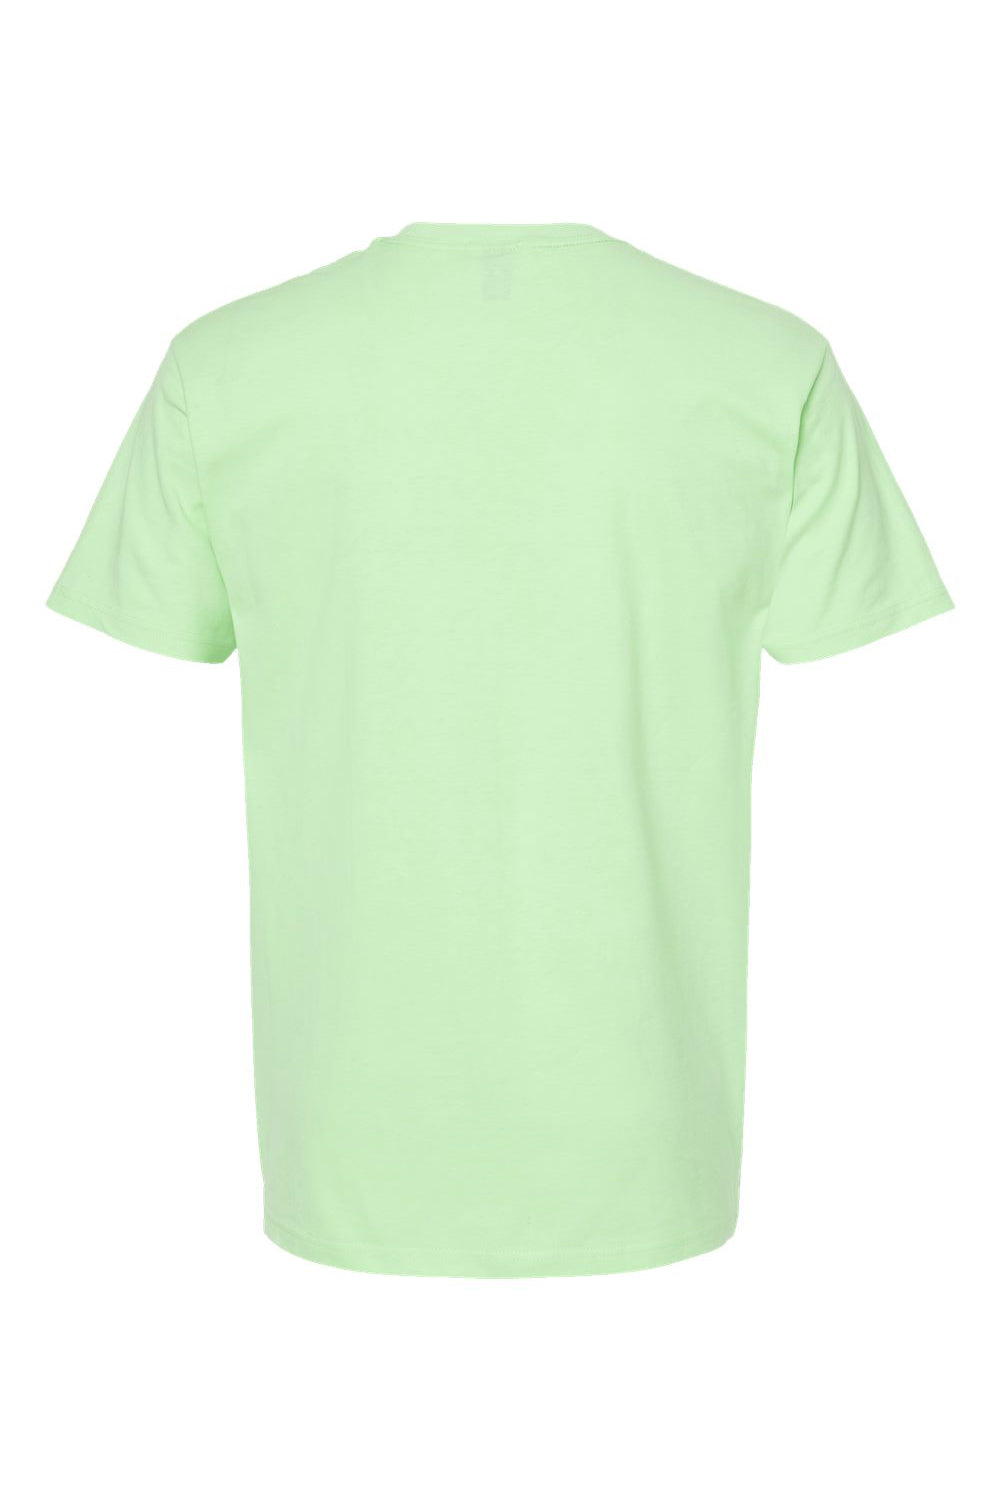 Tultex 290 Mens Jersey Short Sleeve Crewneck T-Shirt Neo Mint Green Flat Back